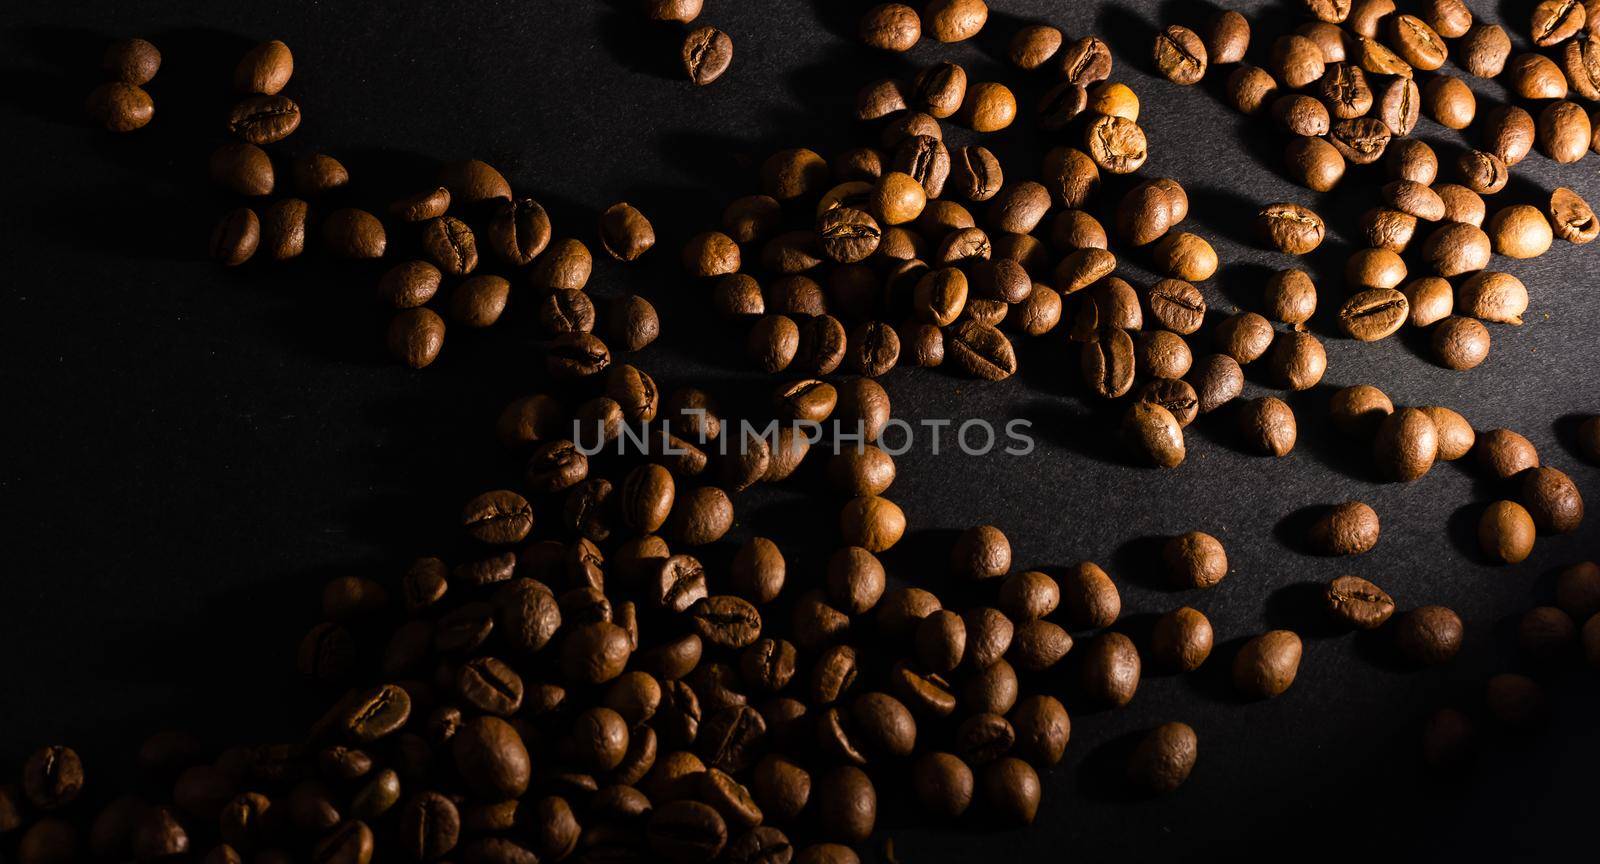 Flying coffee beans over dark.